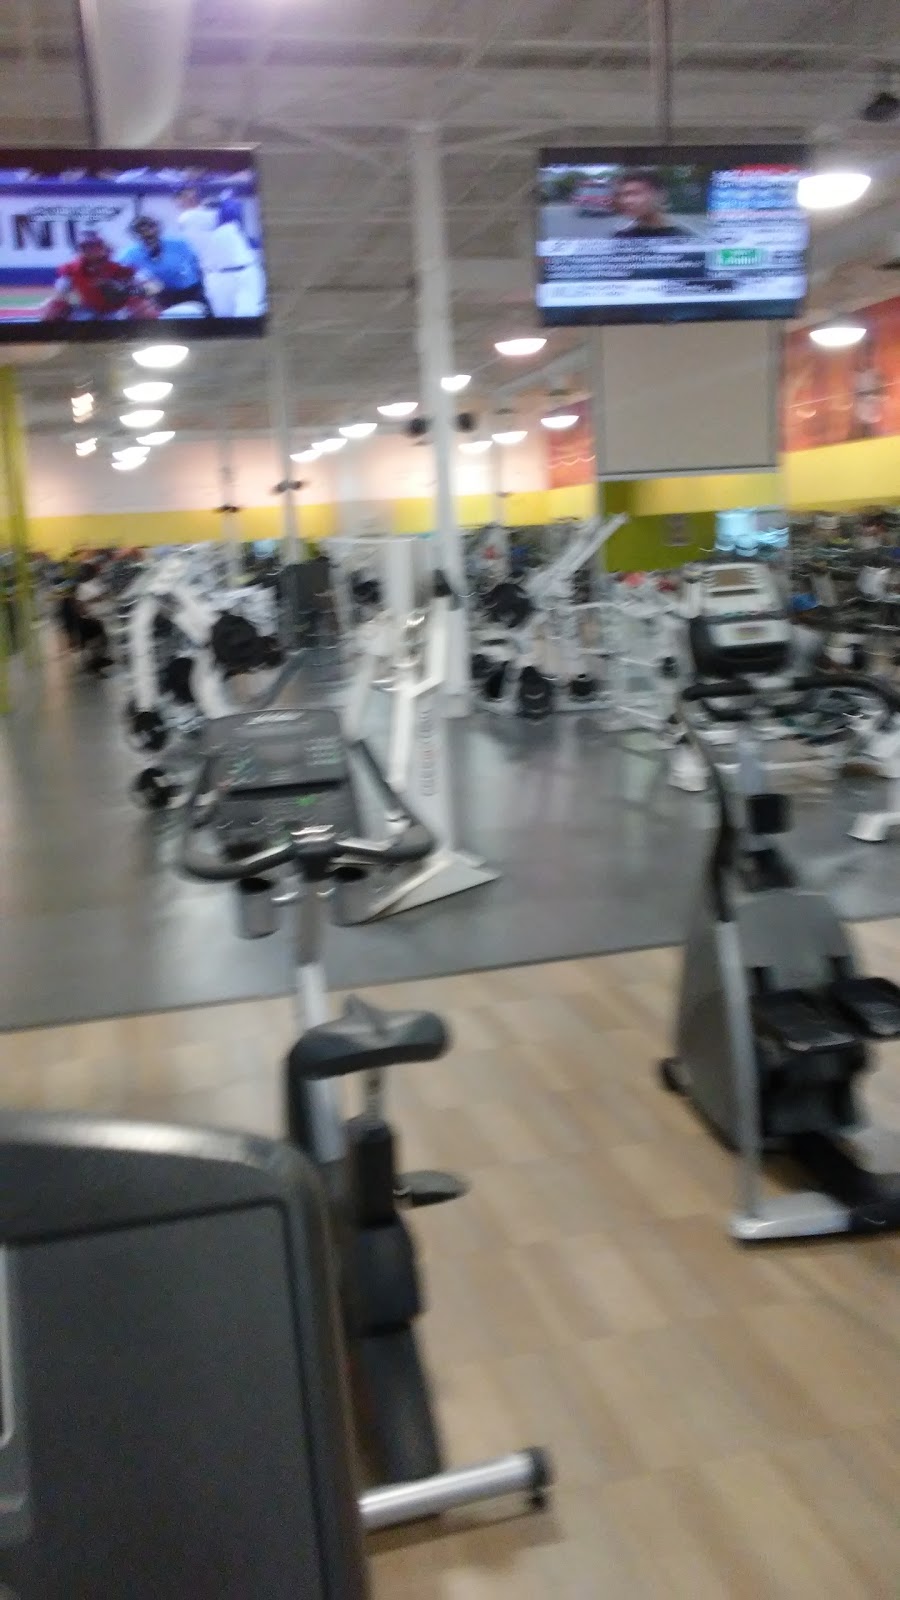 LA Fitness | gym | 539 Steeles Ave E, Brampton, ON L6W 4S2, Canada | 9054527800 OR +1 905-452-7800